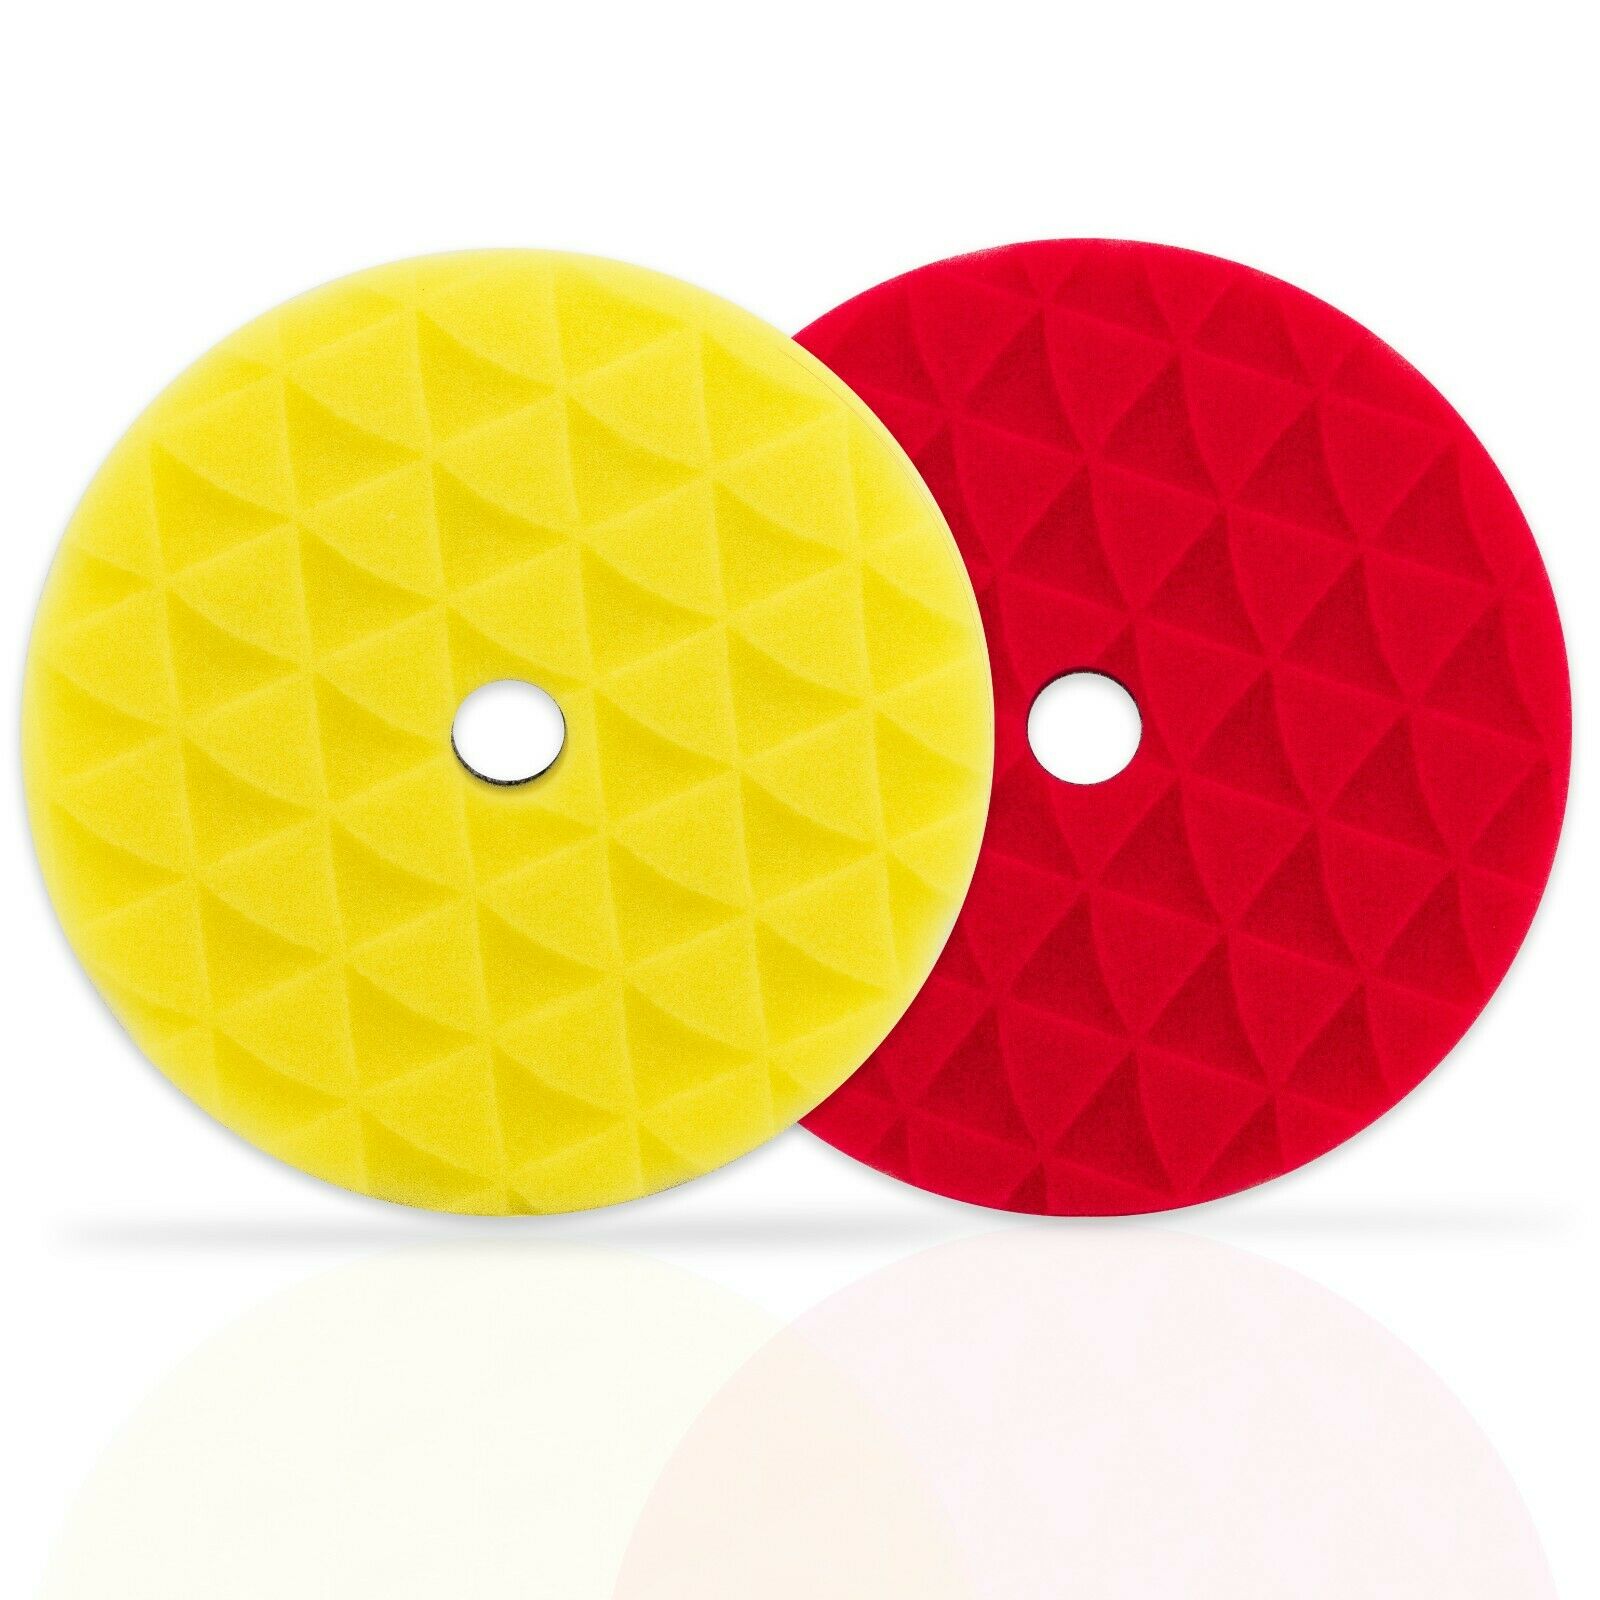 Shinemate - 7" Black Diamond (1) Yellow High Cut Foam Pad + (1) Red Finishing Foam Pad to fit 6" Backing Plates - Tool Guy Republic